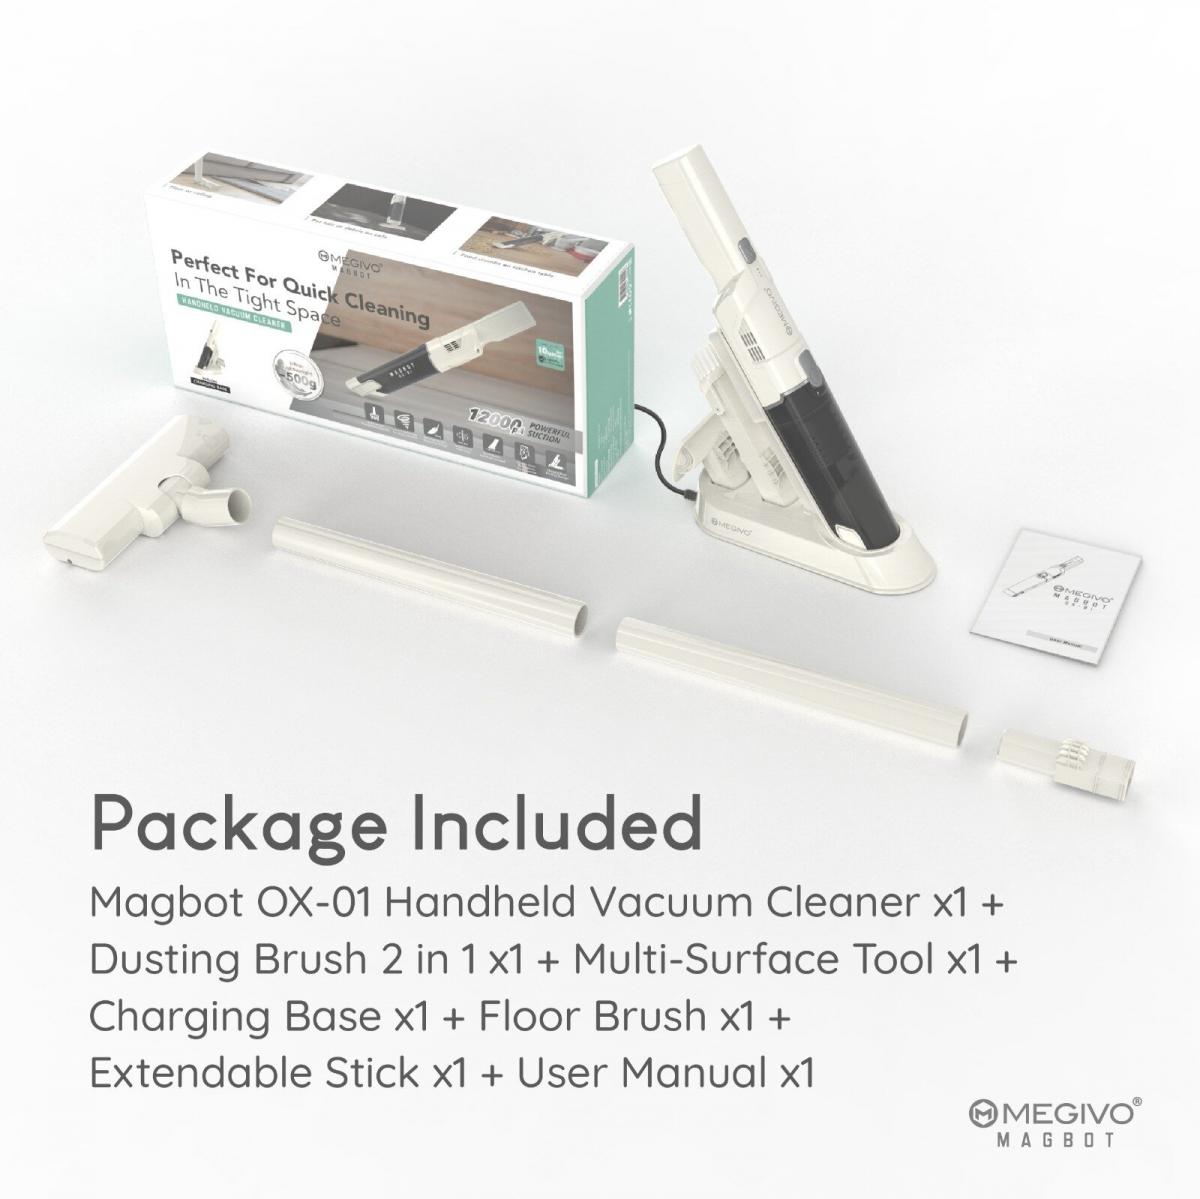 Megivo - Magbot OX-01 輕巧無線手提吸塵機